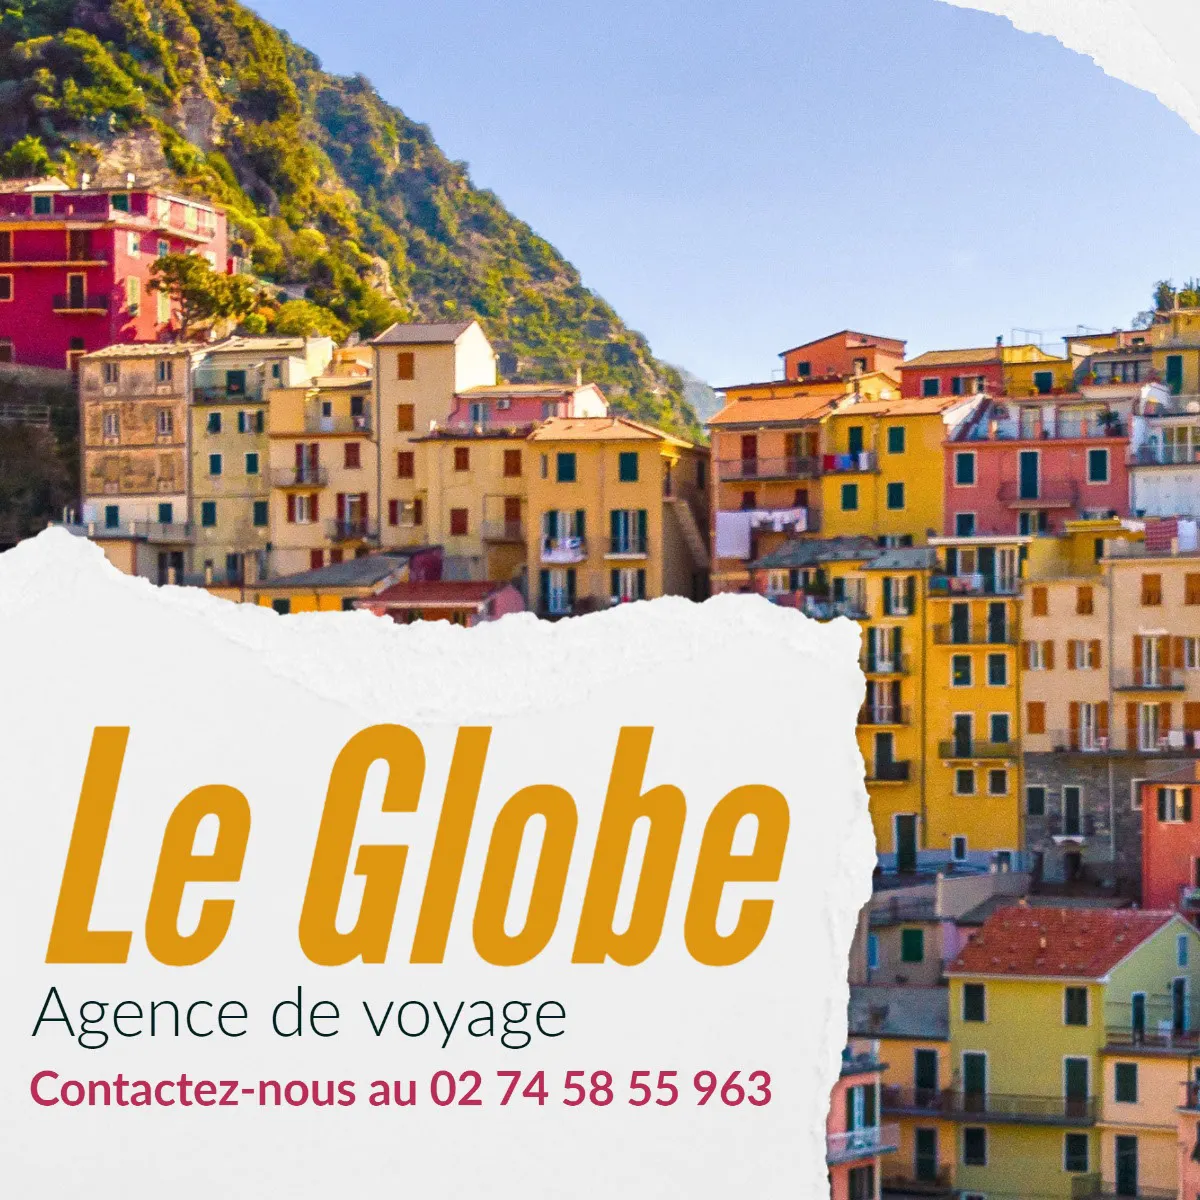 Yellow & Burgundy Travel Agency Facebook Ad